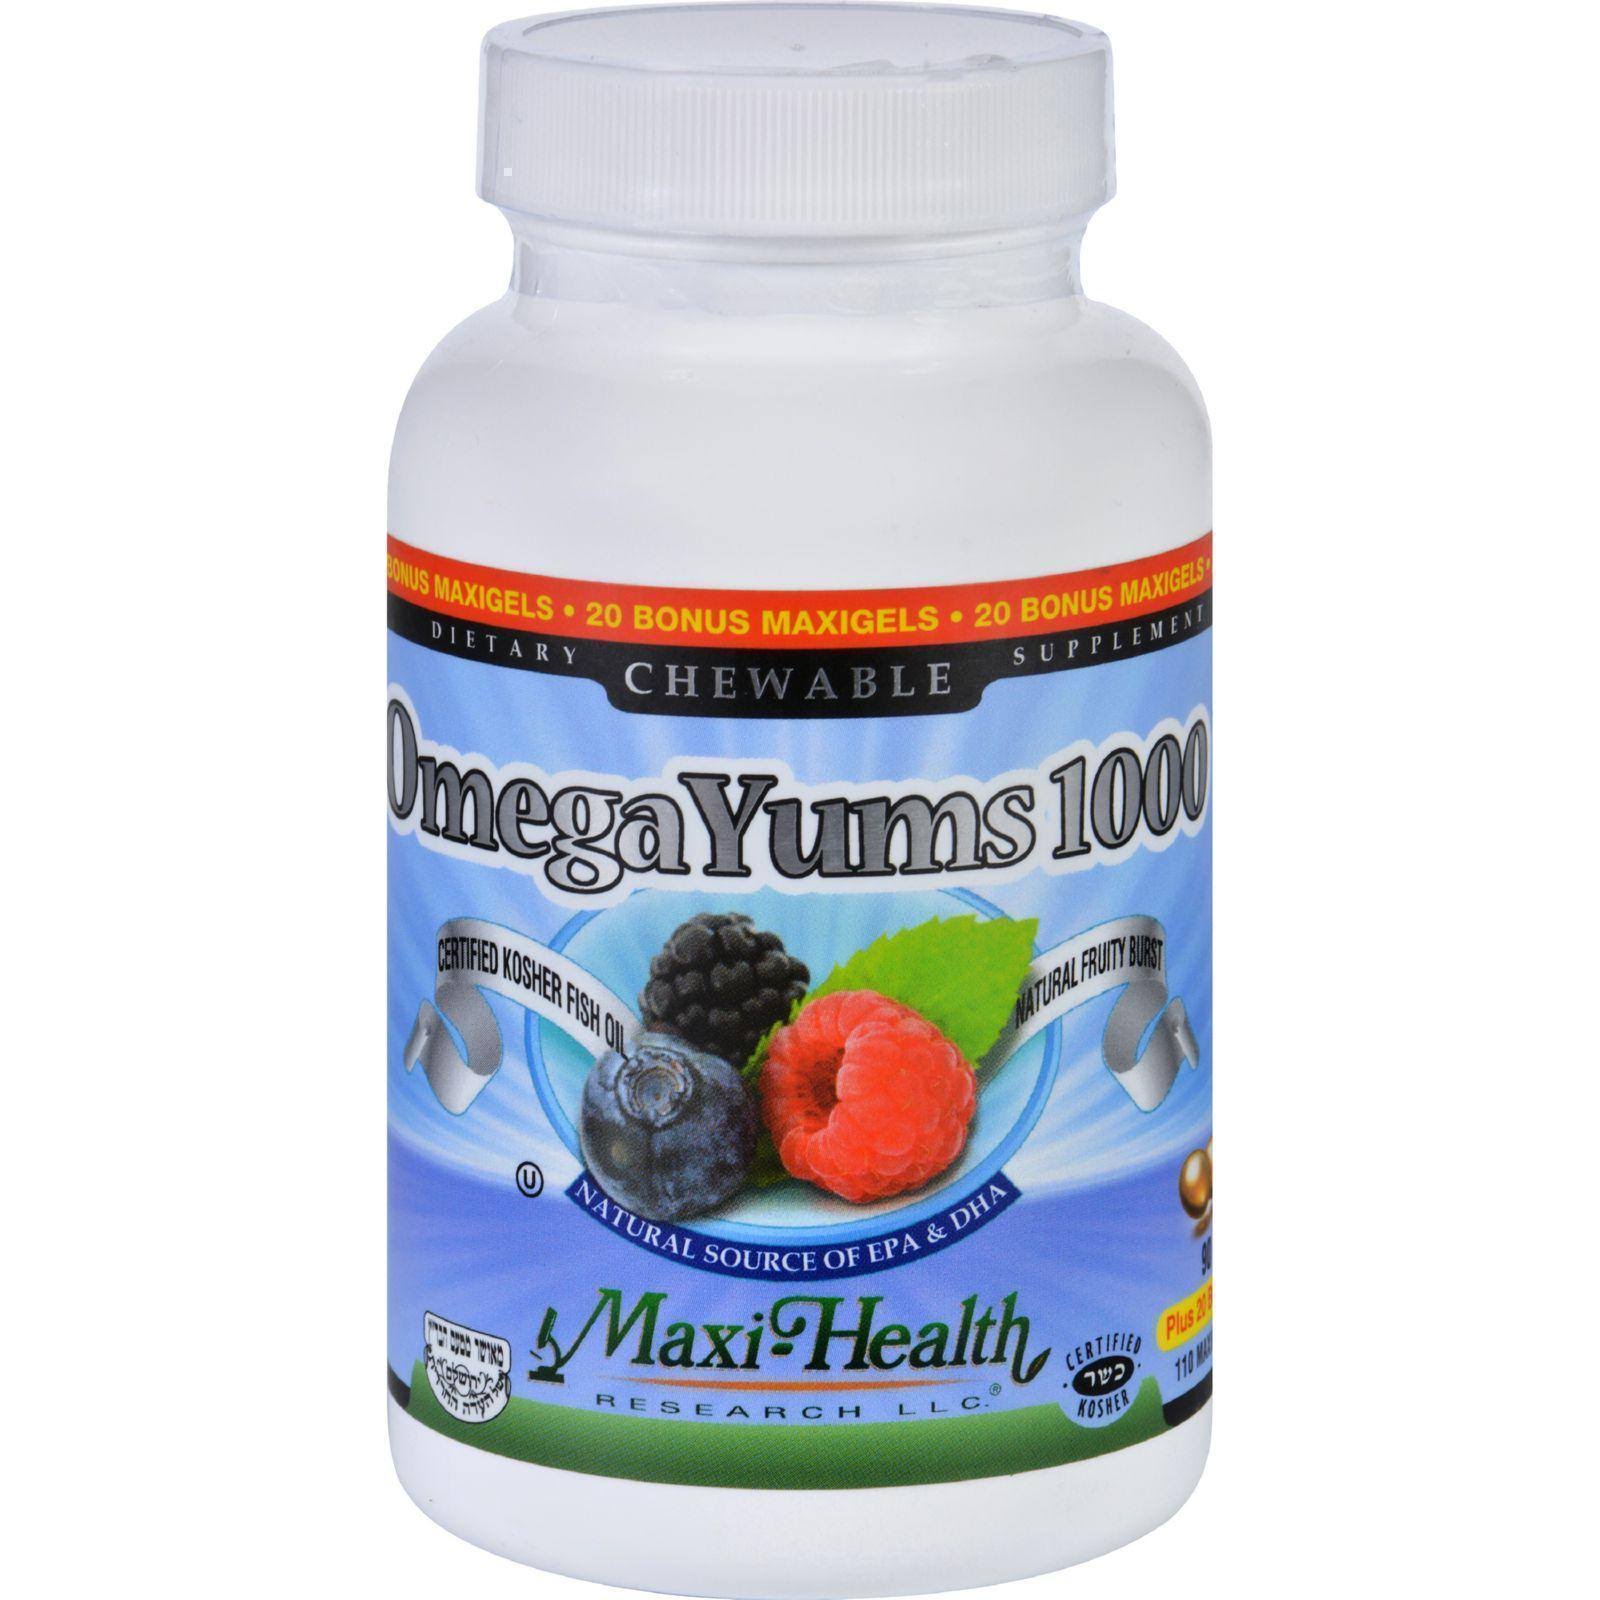 Maxi Health Omega Yums 1000 Chewable Vitamins - Fruity Burst, 110ct